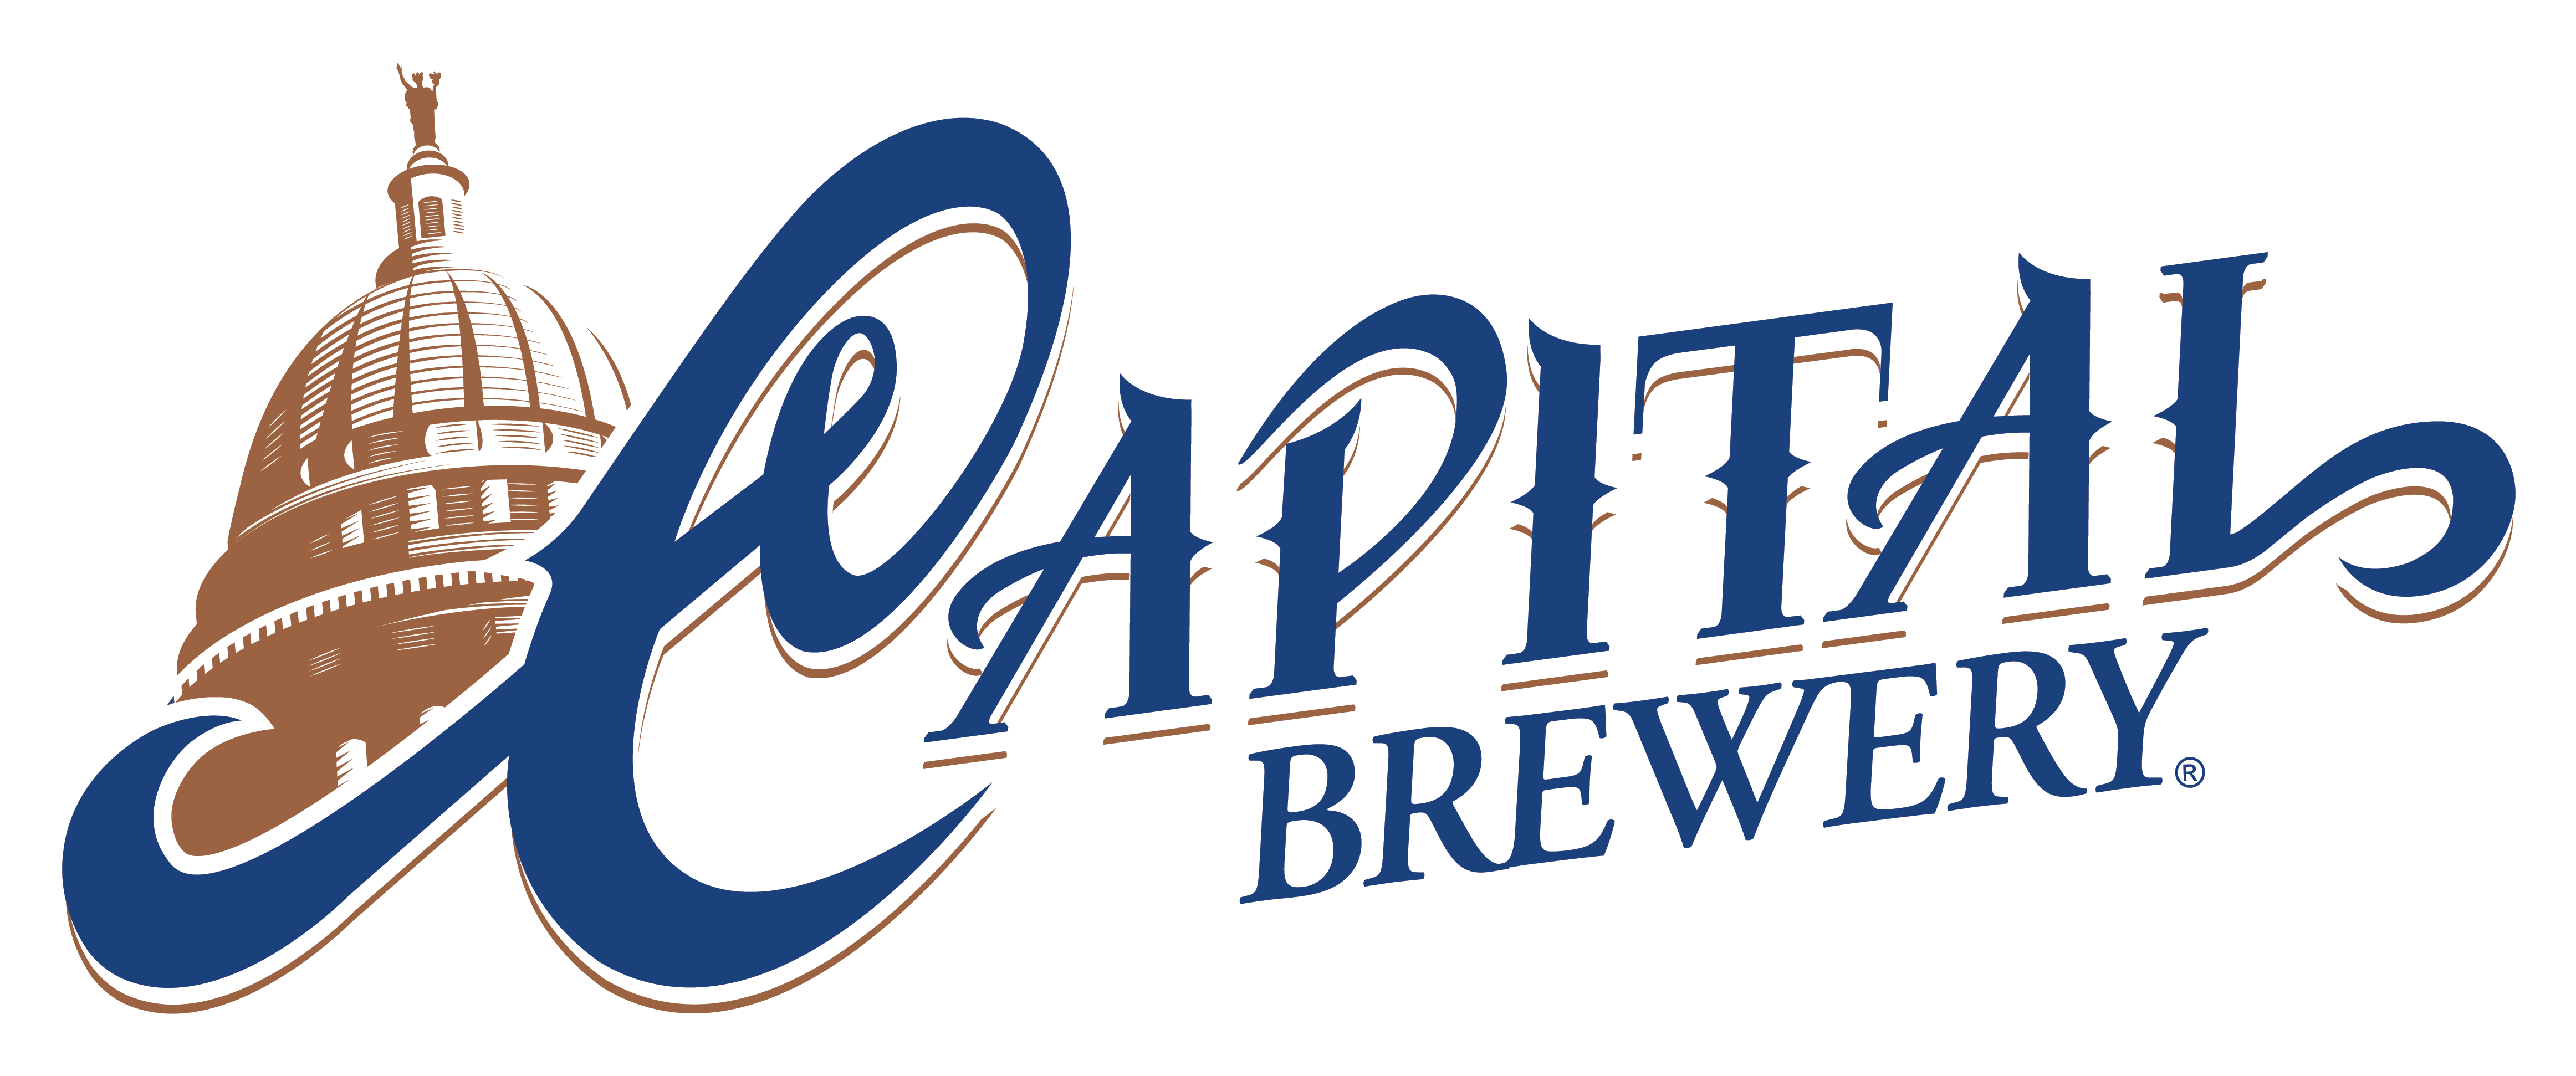 Capital Brewery